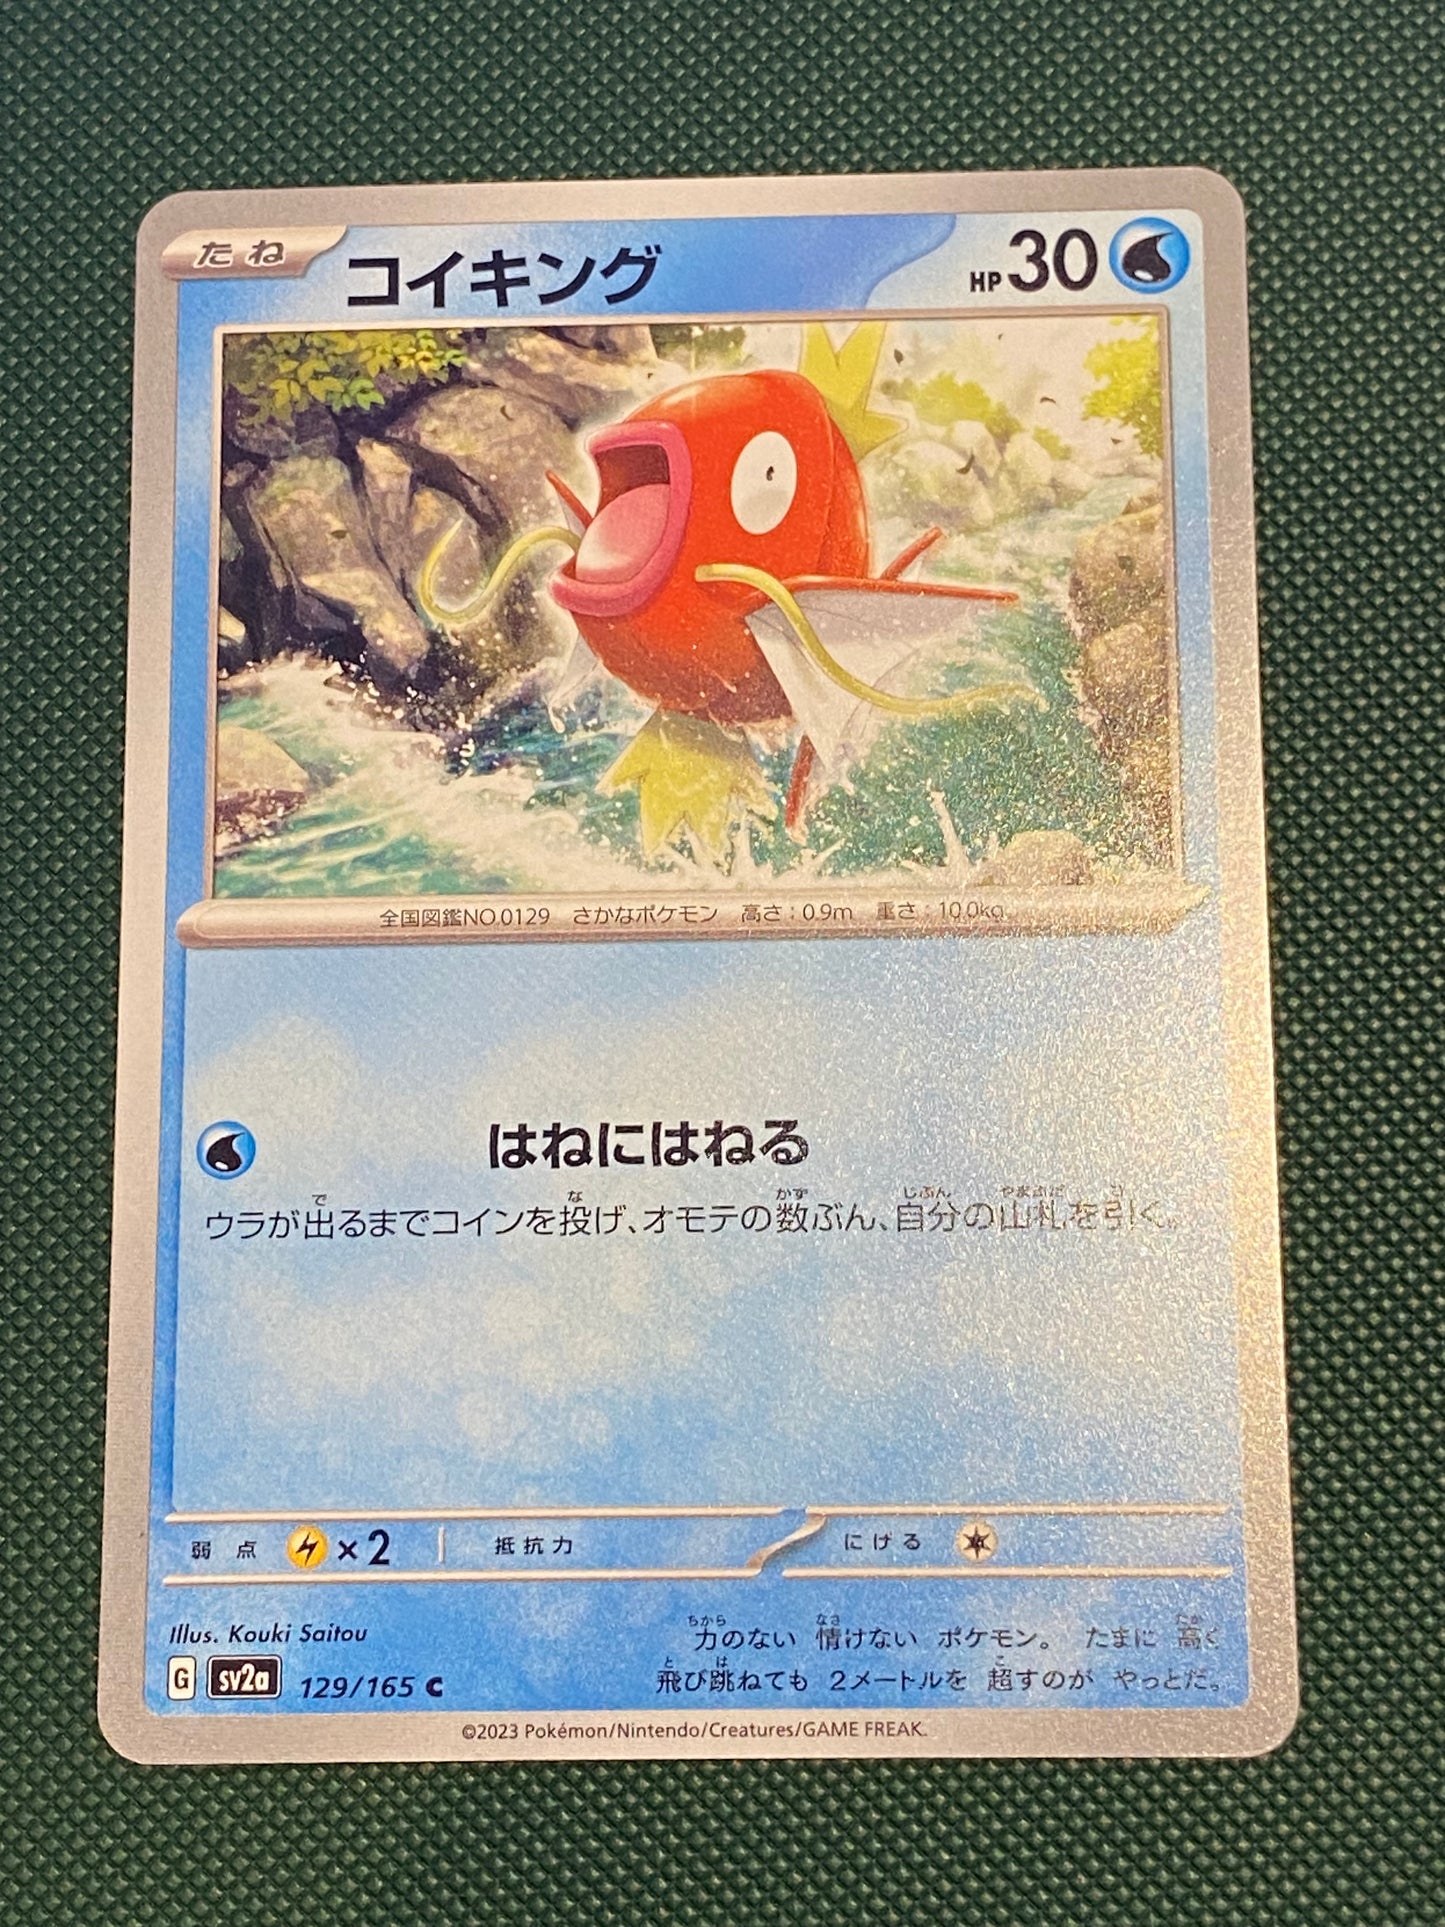 Magikarp - Pokémon Card 151 Japanese